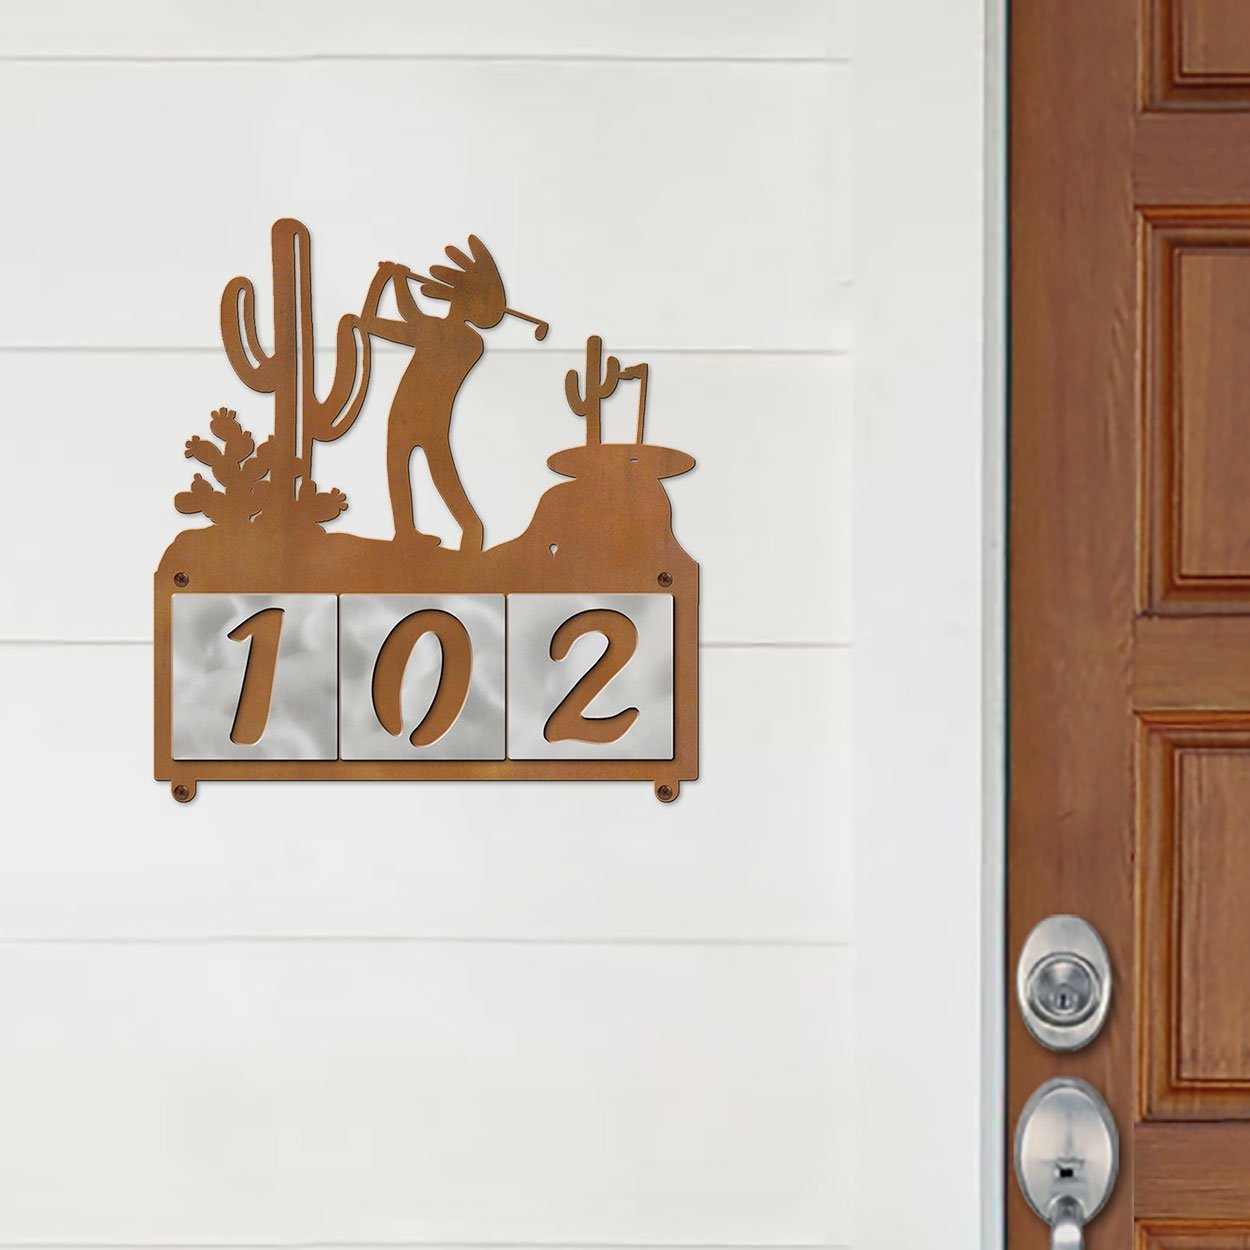 609133 - XL Kokopelli Desert Golfer Design 3-Digit Horizontal 6in Tile Outdoor House Numbers